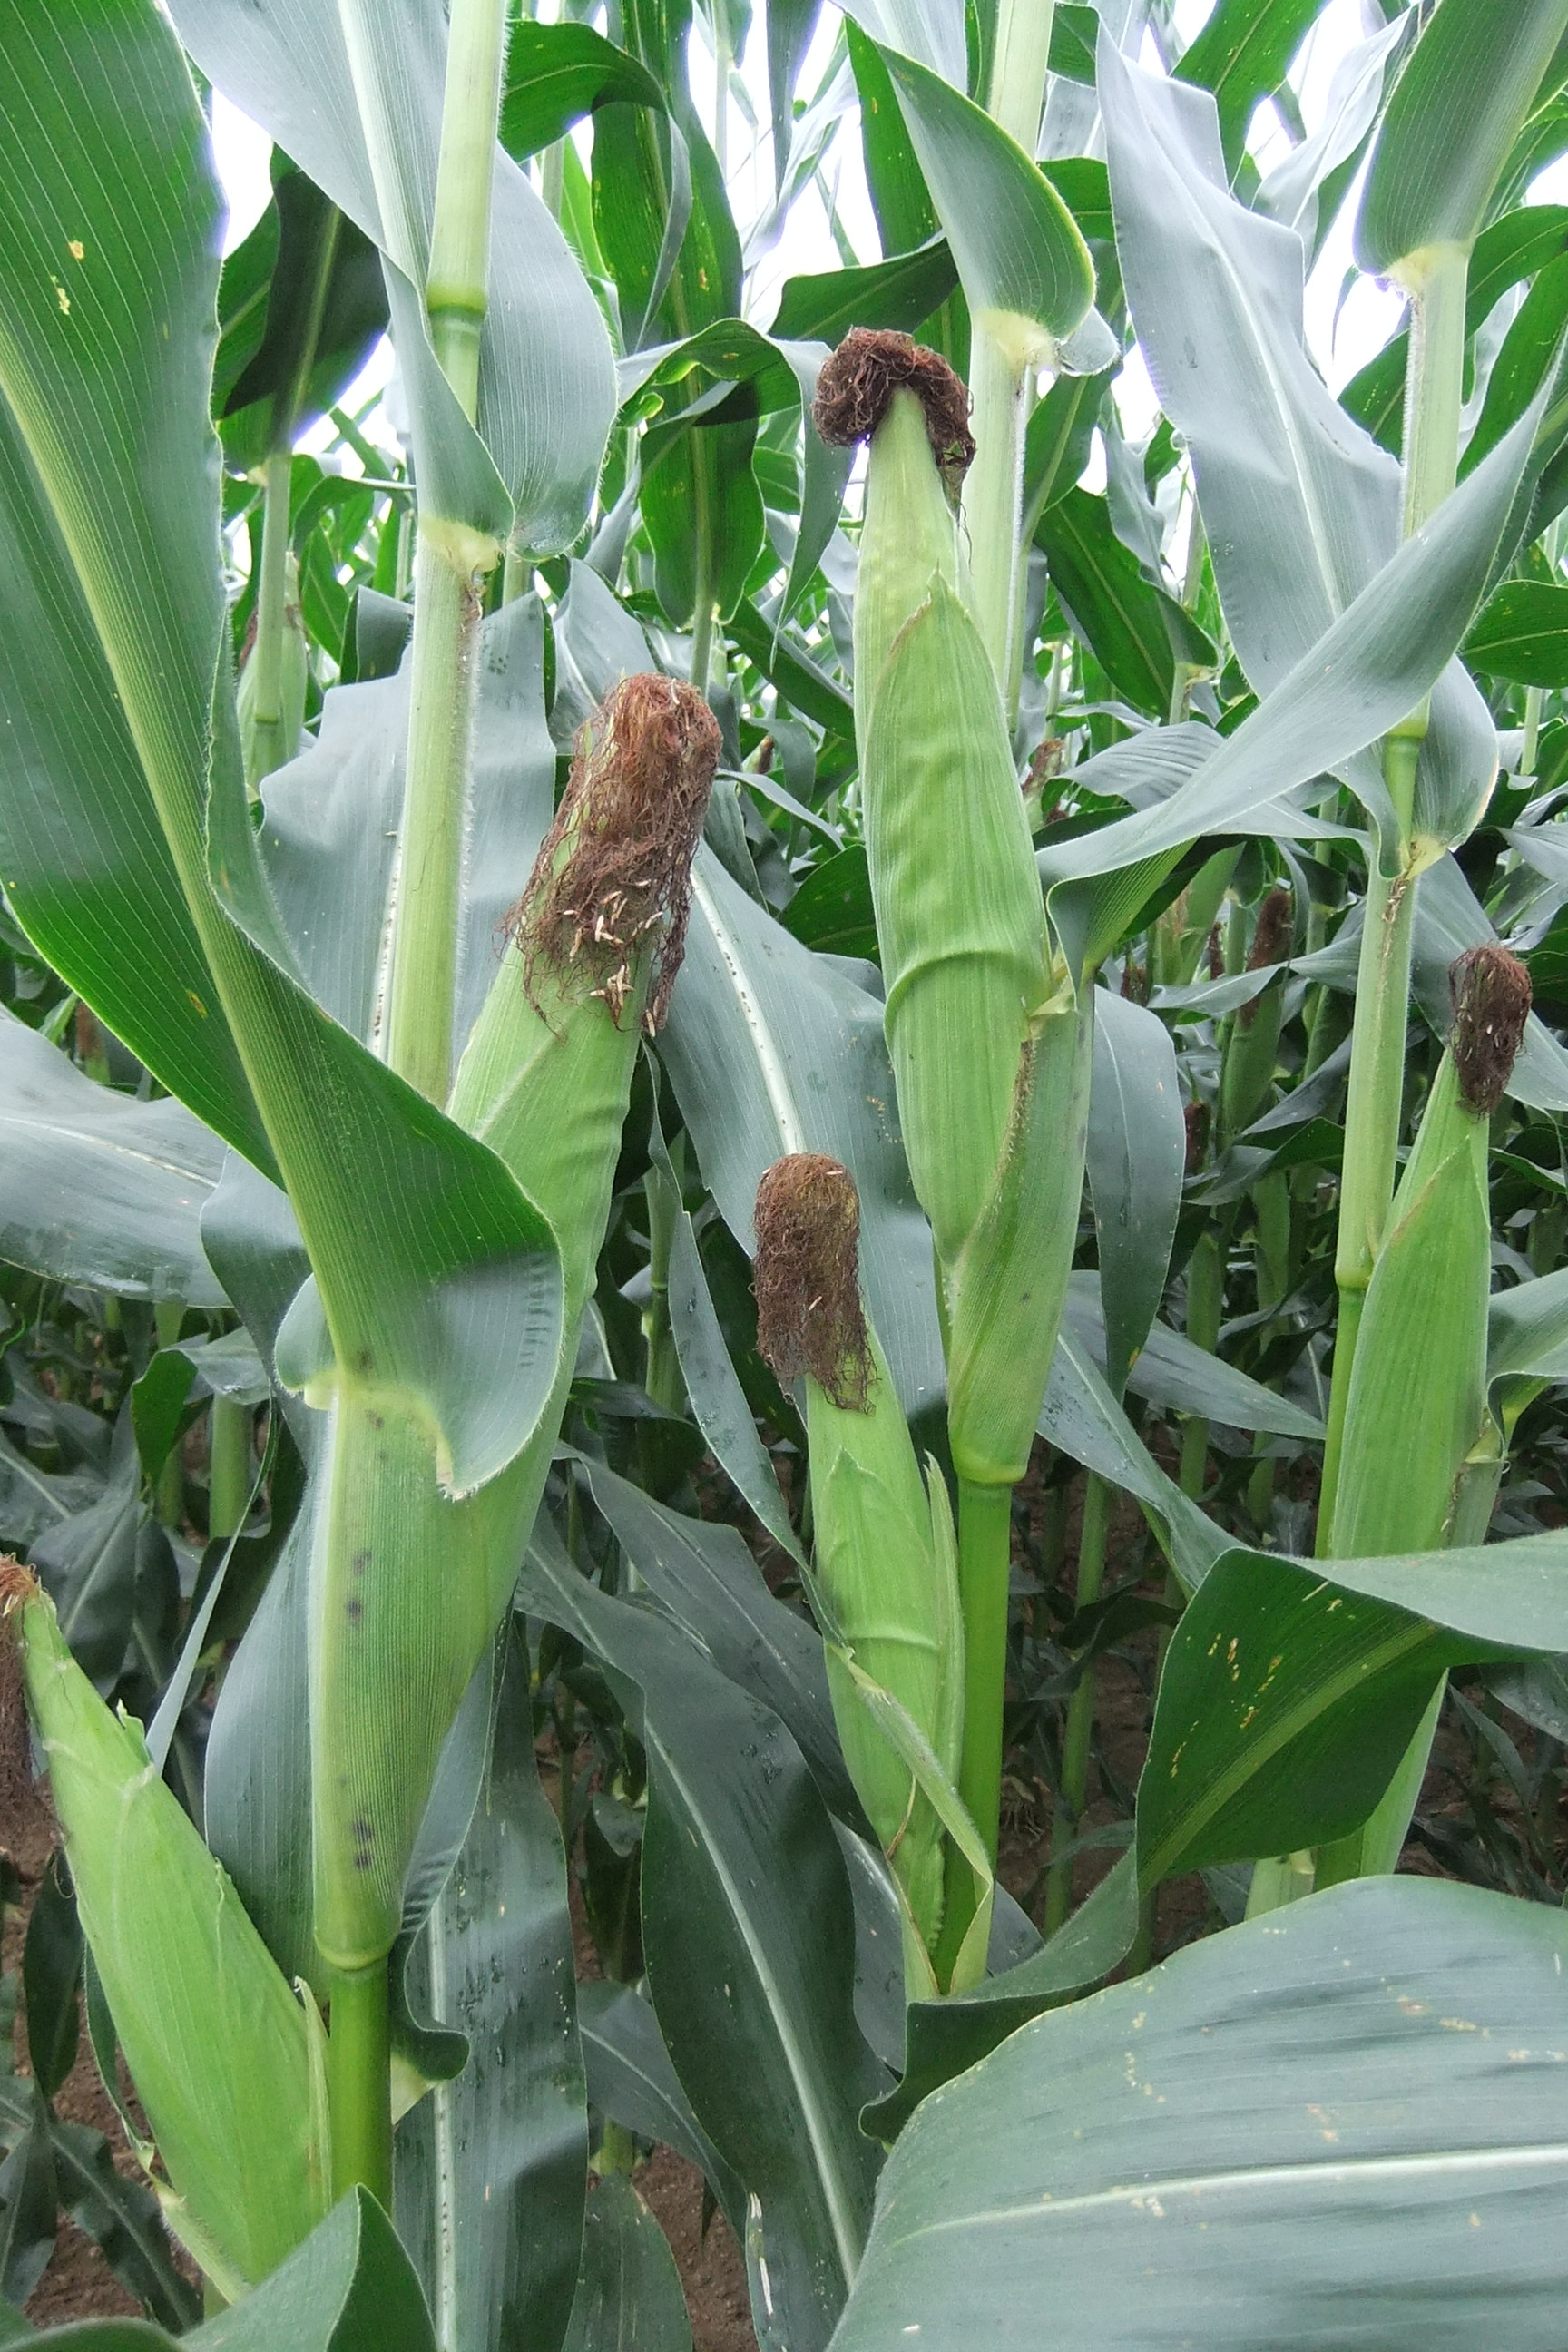 Corn plots plants APD 2013 (18)